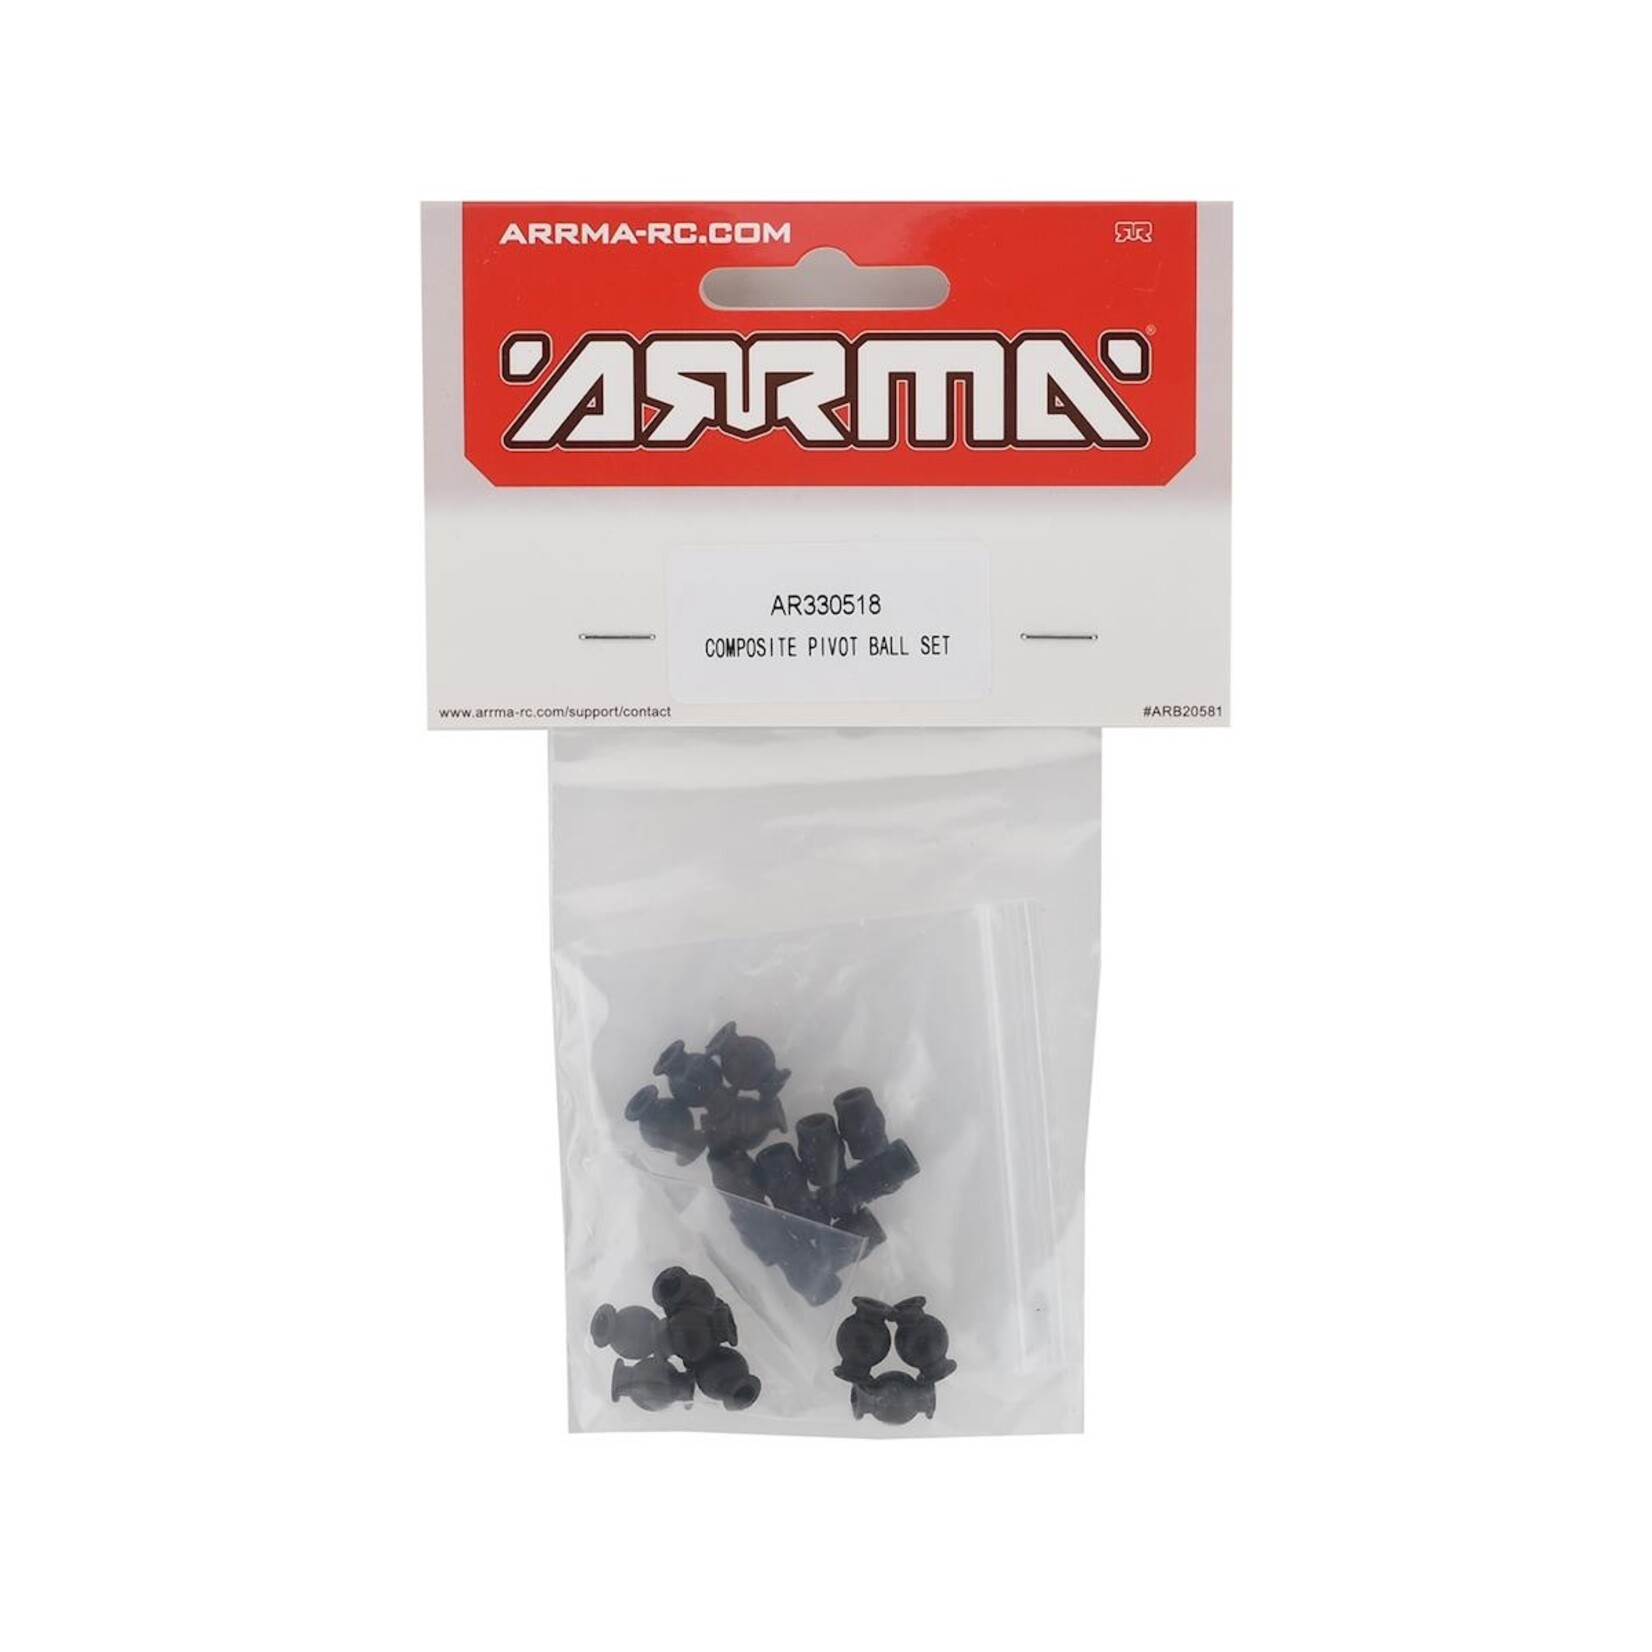 ARRMA Arrma Outcast/Kraton 4S Composite Pivot Ball (22) #AR330518